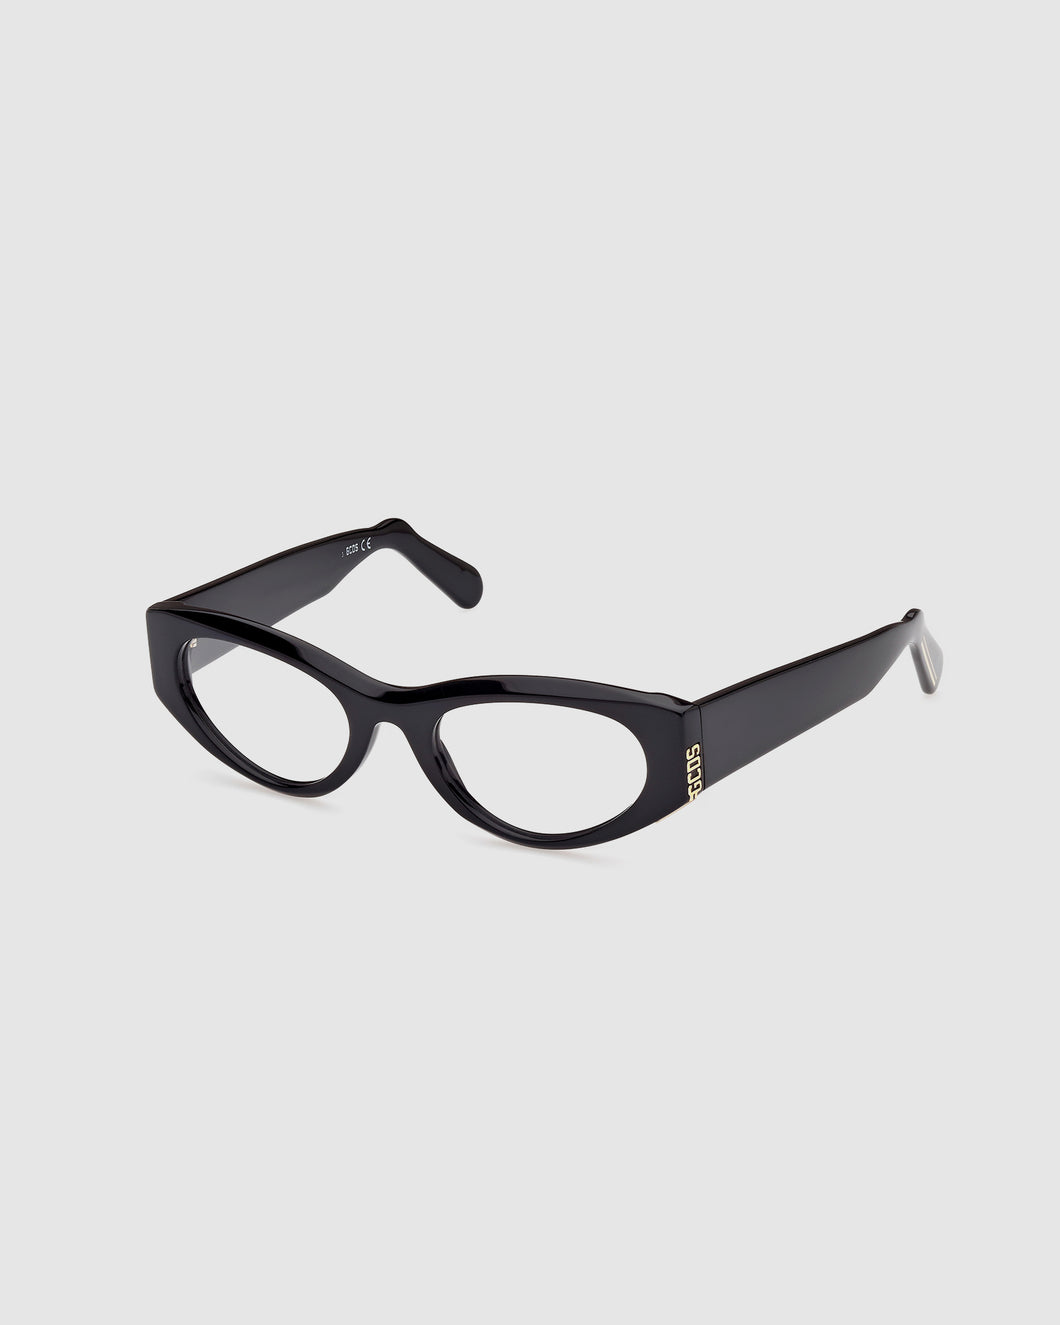 GD5016 Cat-eye eyeglasses : Unisex Sunglasses Black  | GCDS